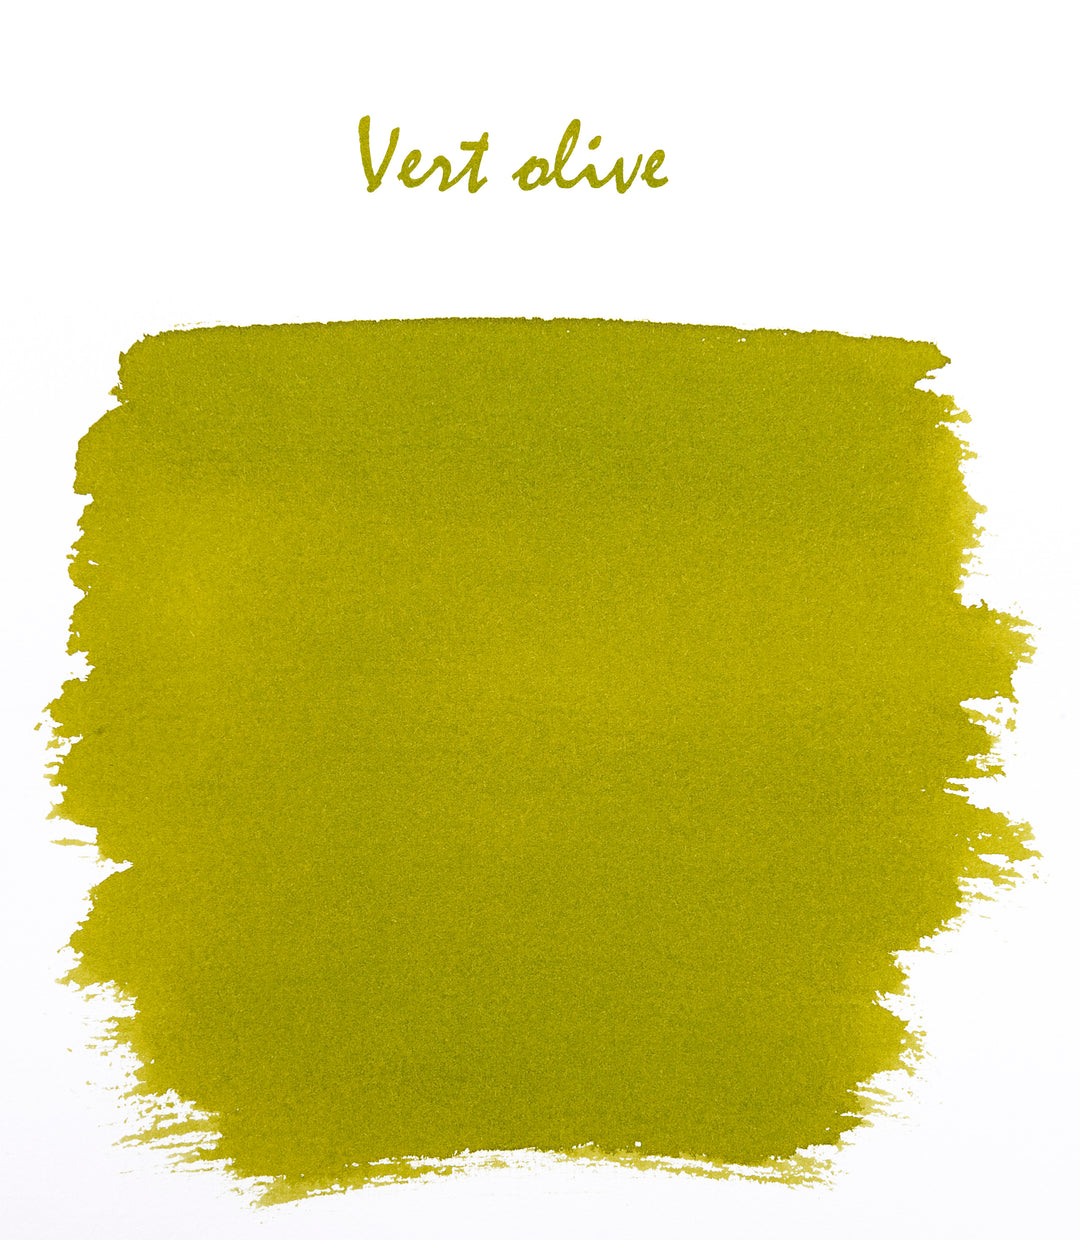 Herbin Standard Ink # 36 - Vert Olive